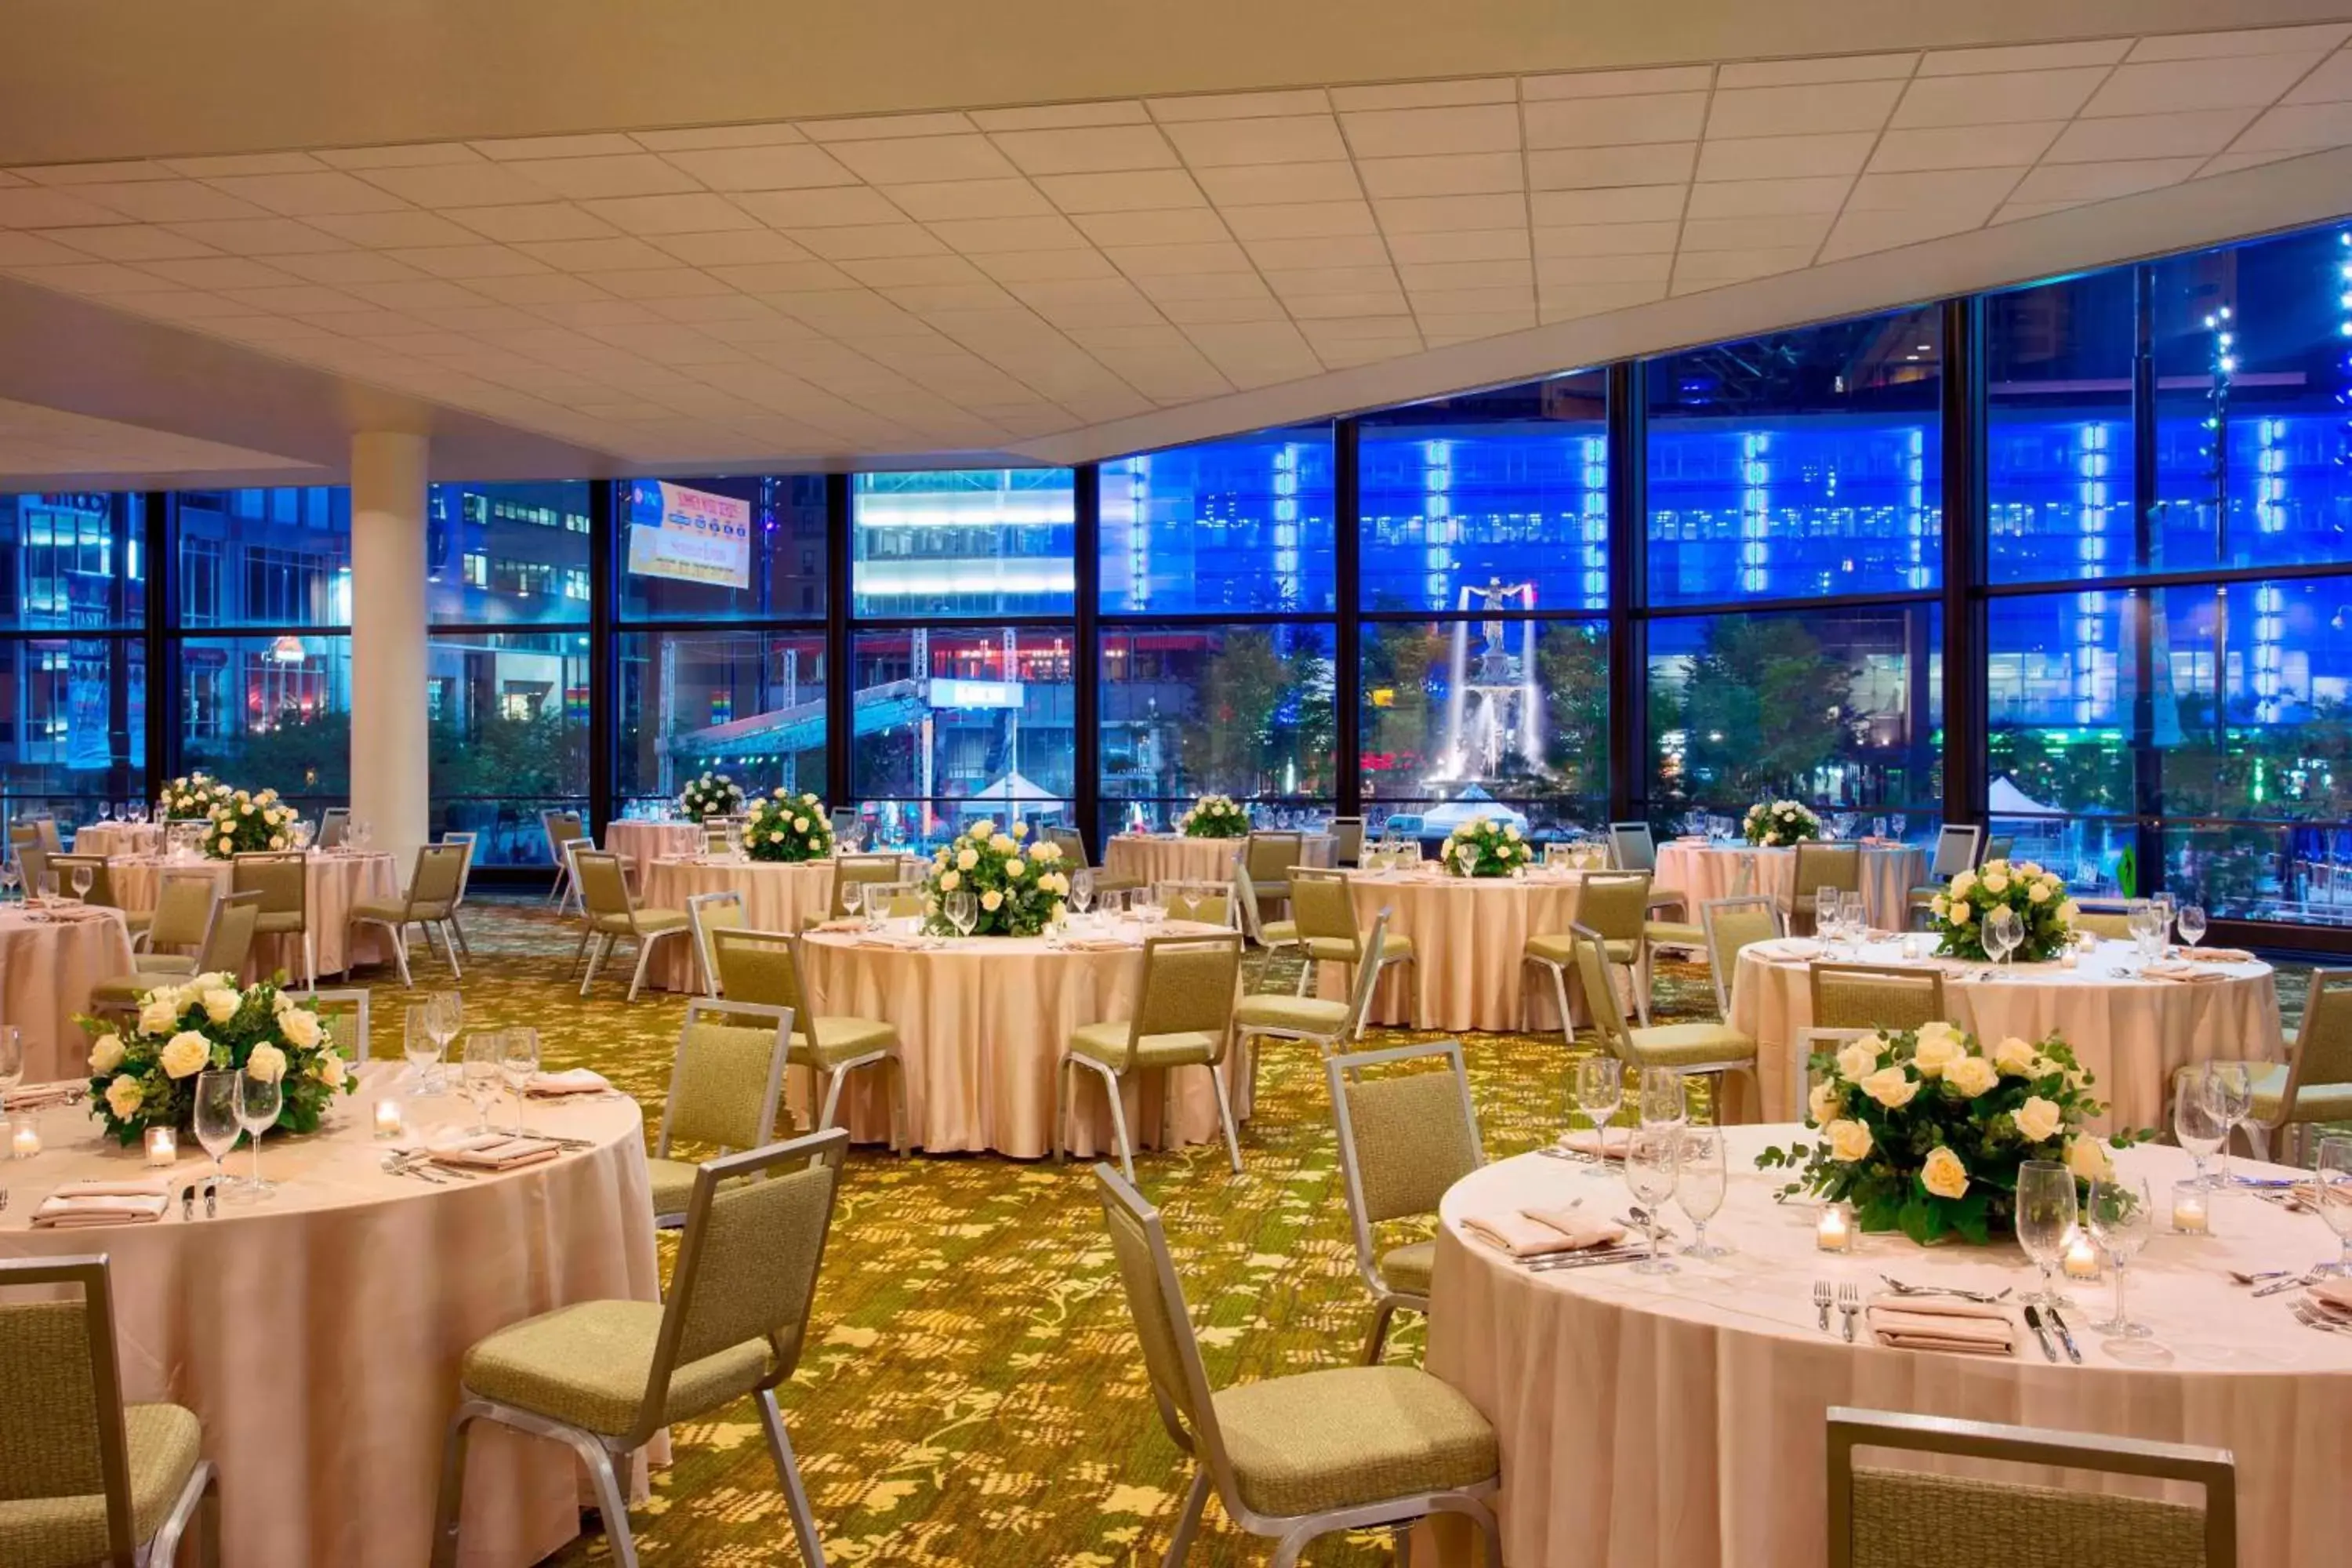 Meeting/conference room, Banquet Facilities in The Westin Cincinnati